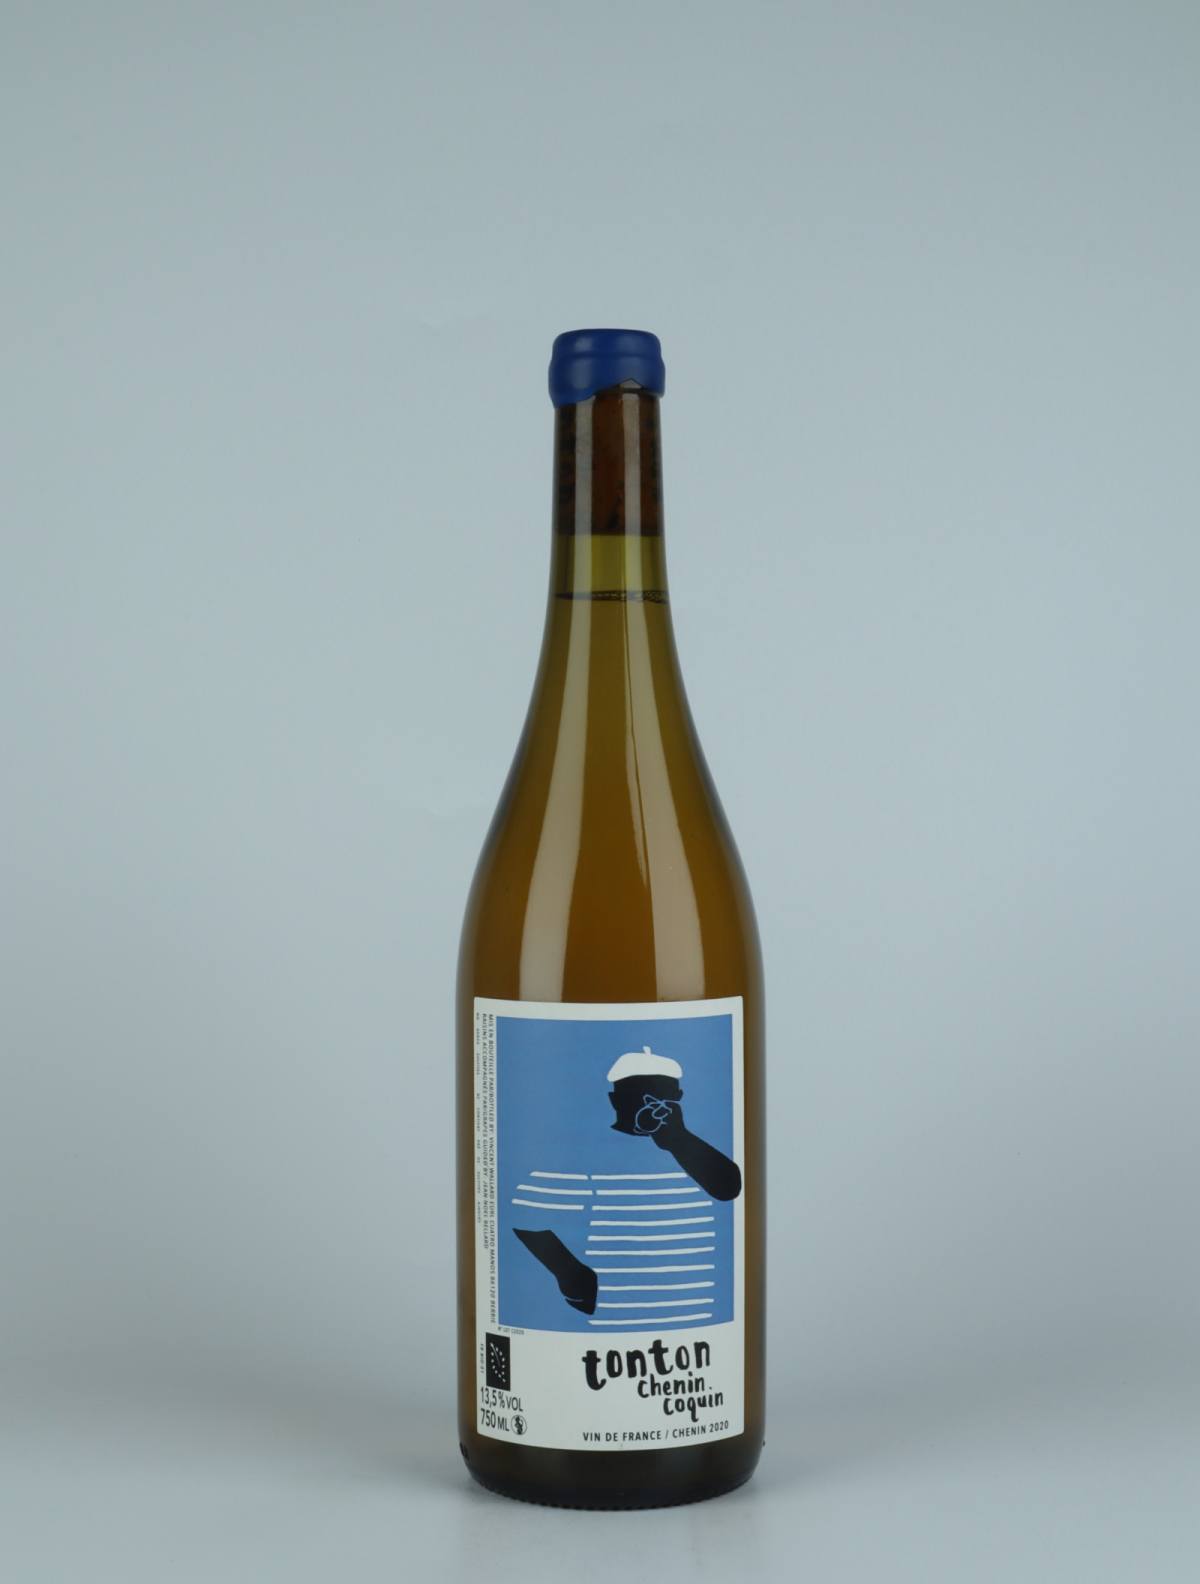 A bottle 2020 Tonton Chenin Coquin White wine from Vincent Wallard, Loire in France